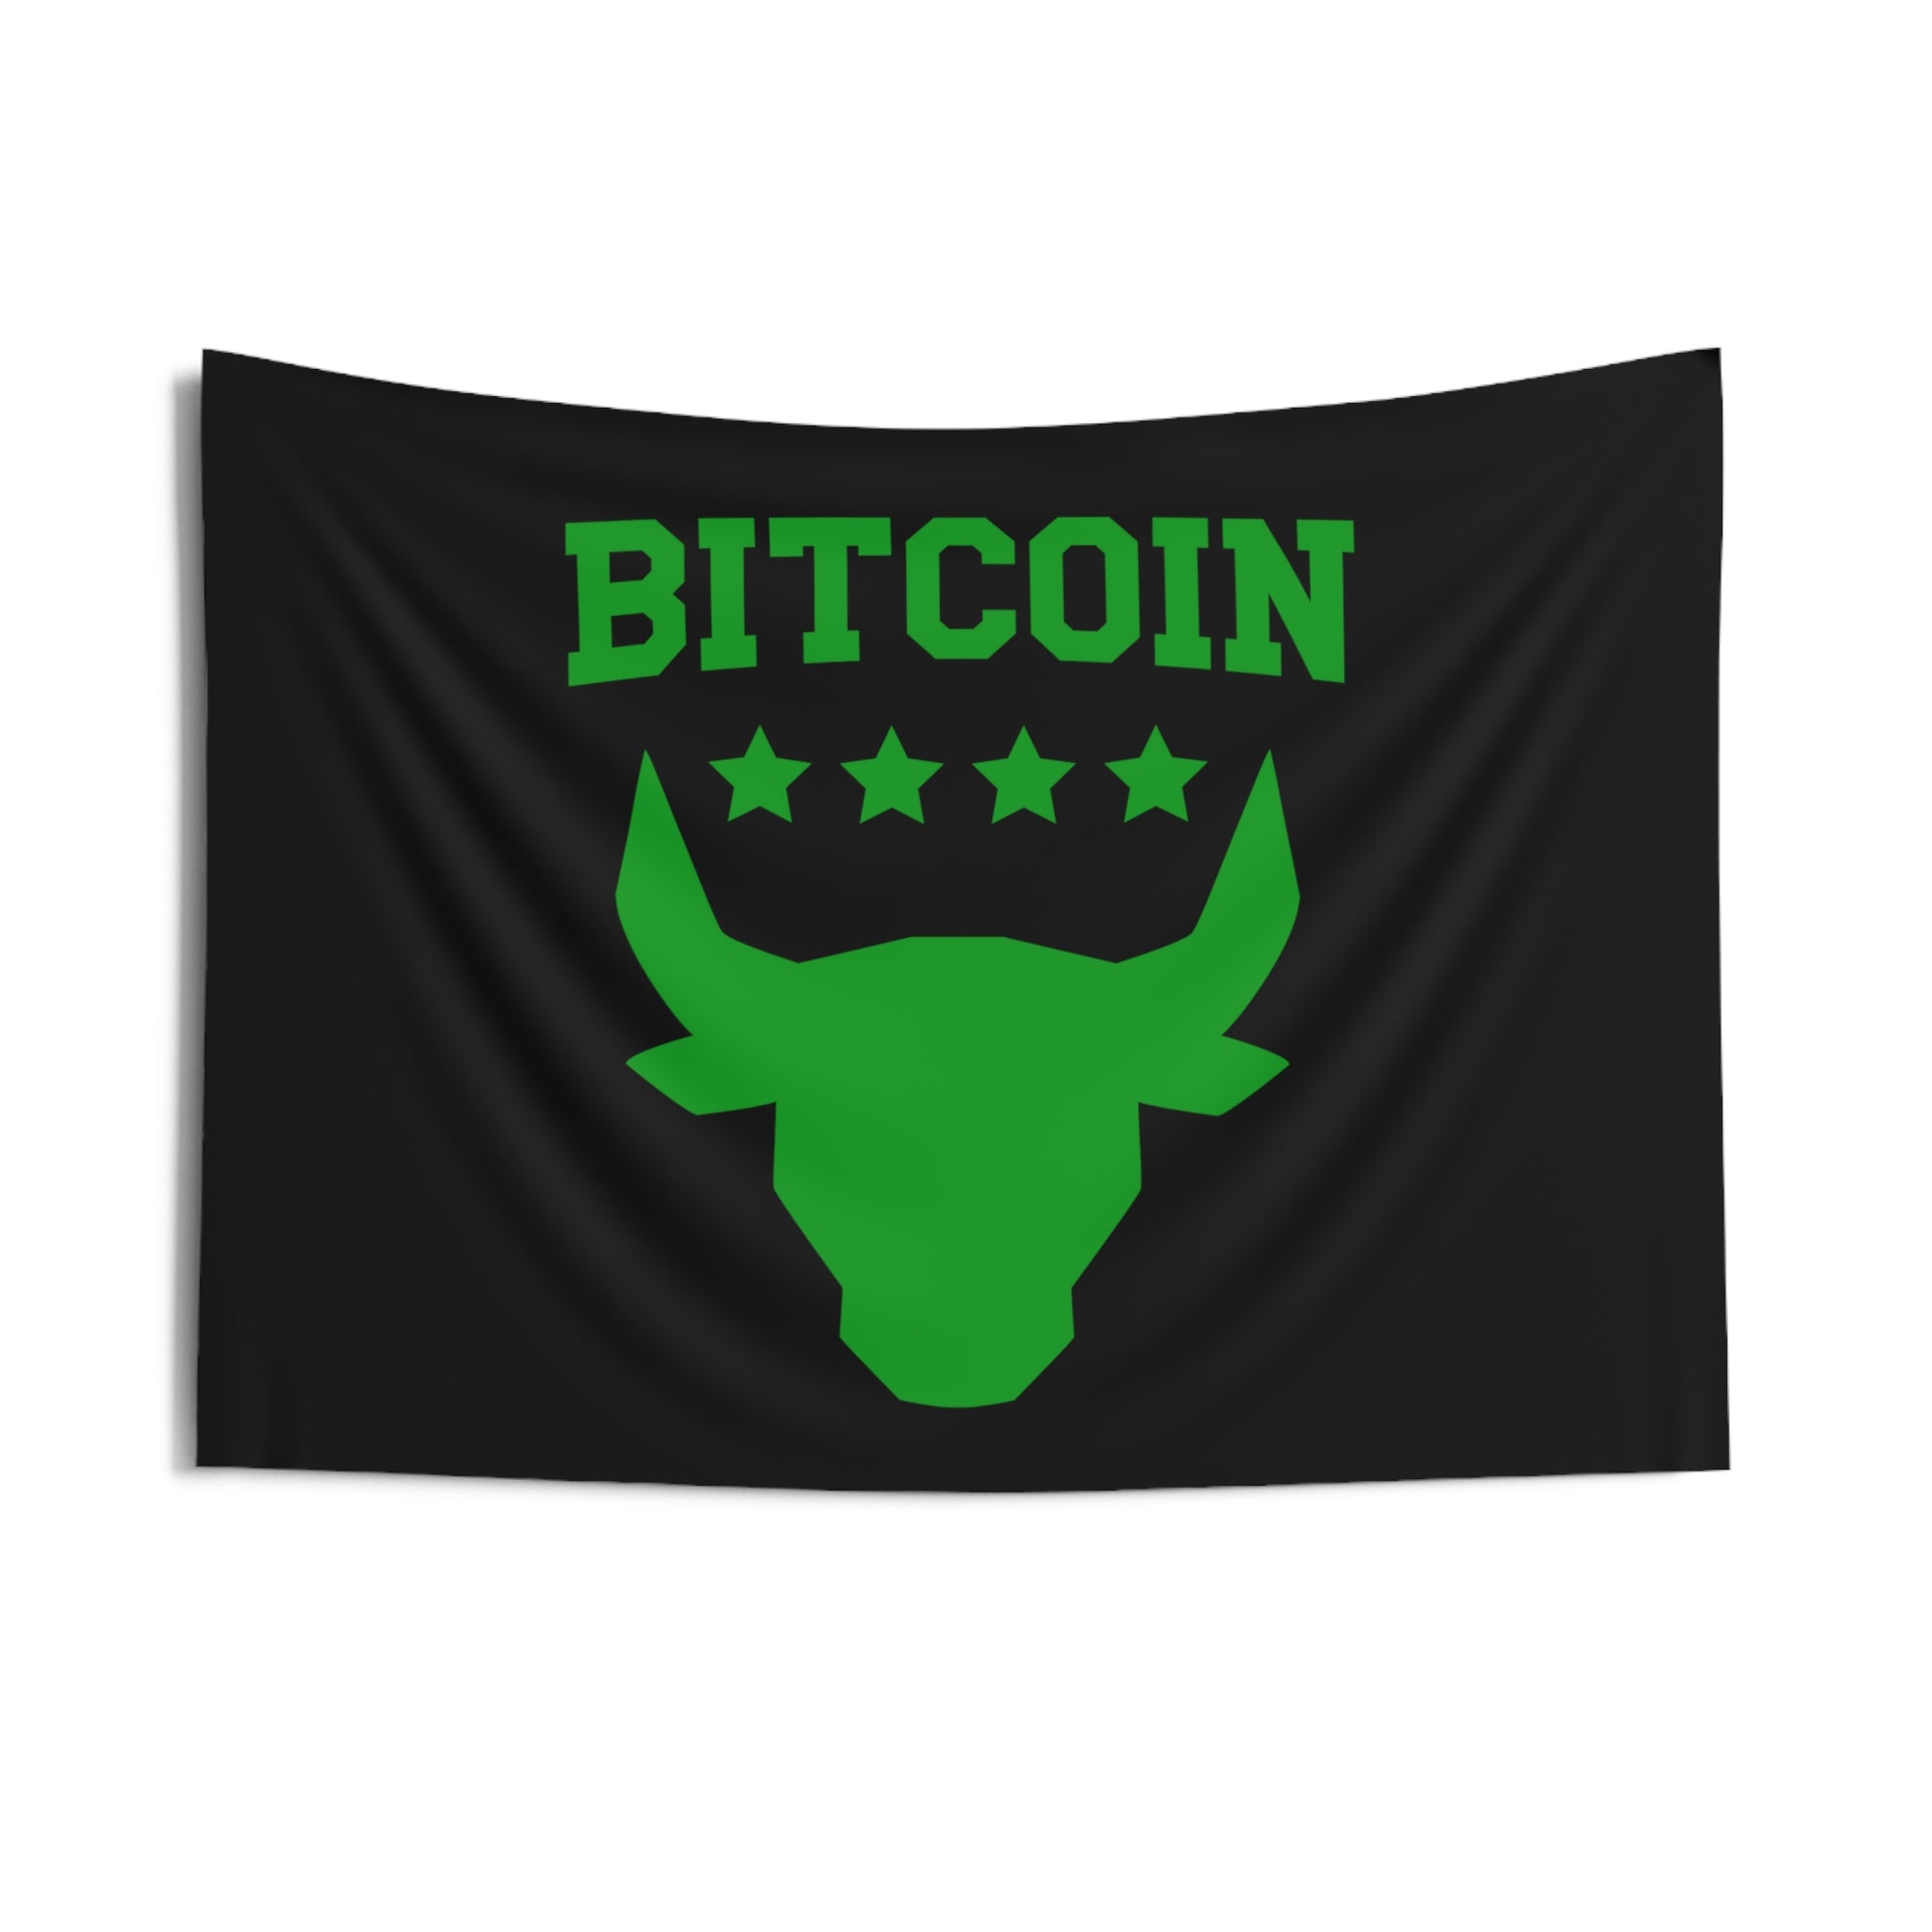 Bitcoin Merchandise - Bitcoin Bull Tapestry.